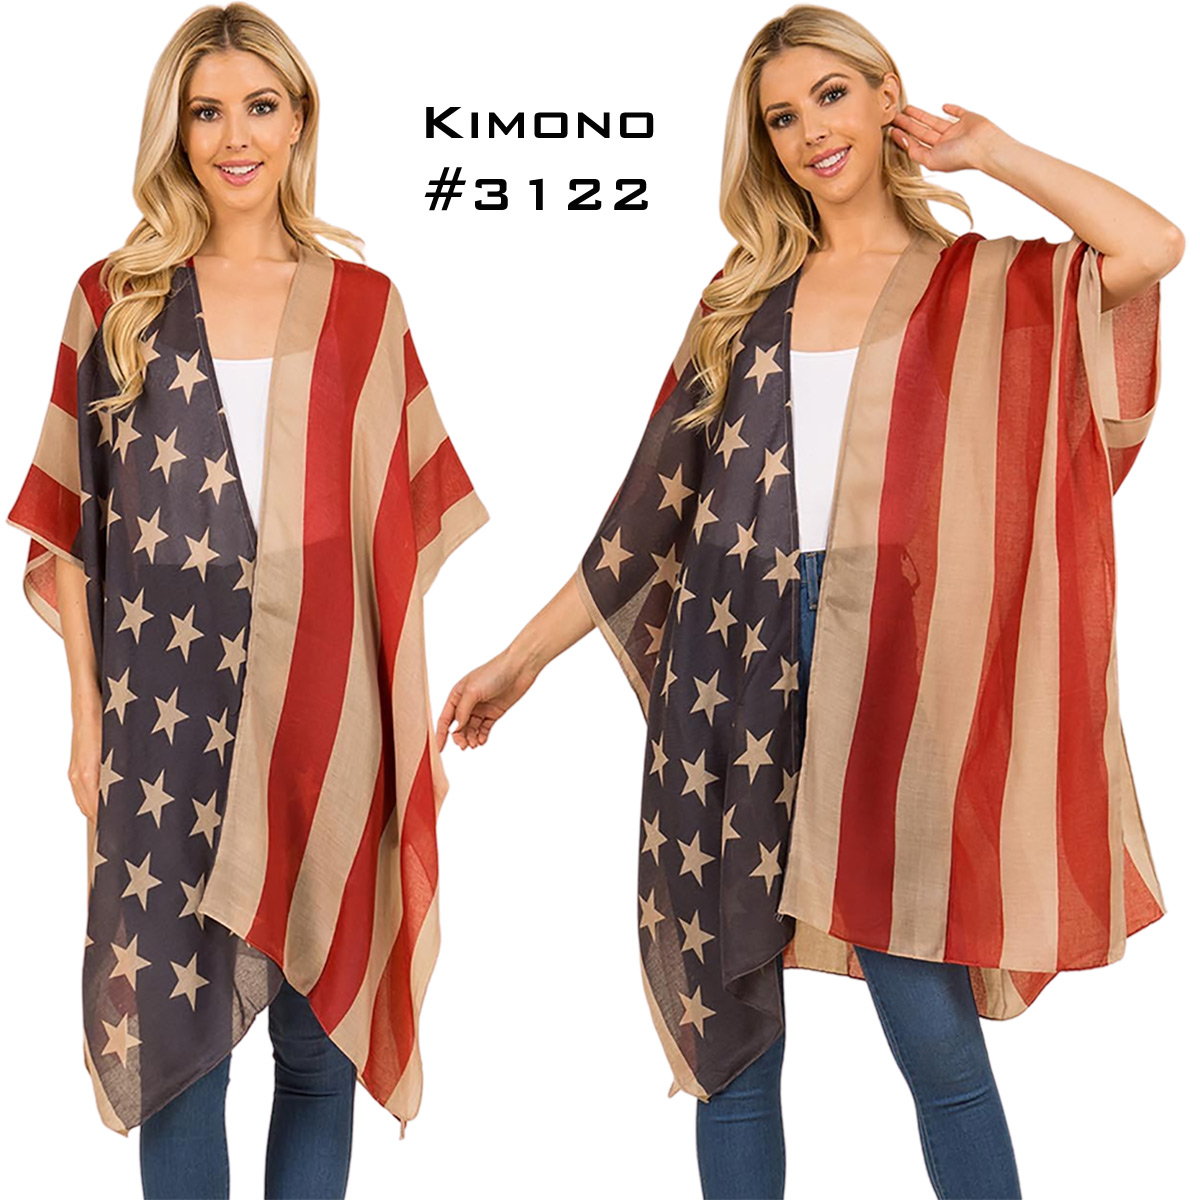 3212 - American Flag Kimono Vests 4132<br> American Flag Kimono  - 